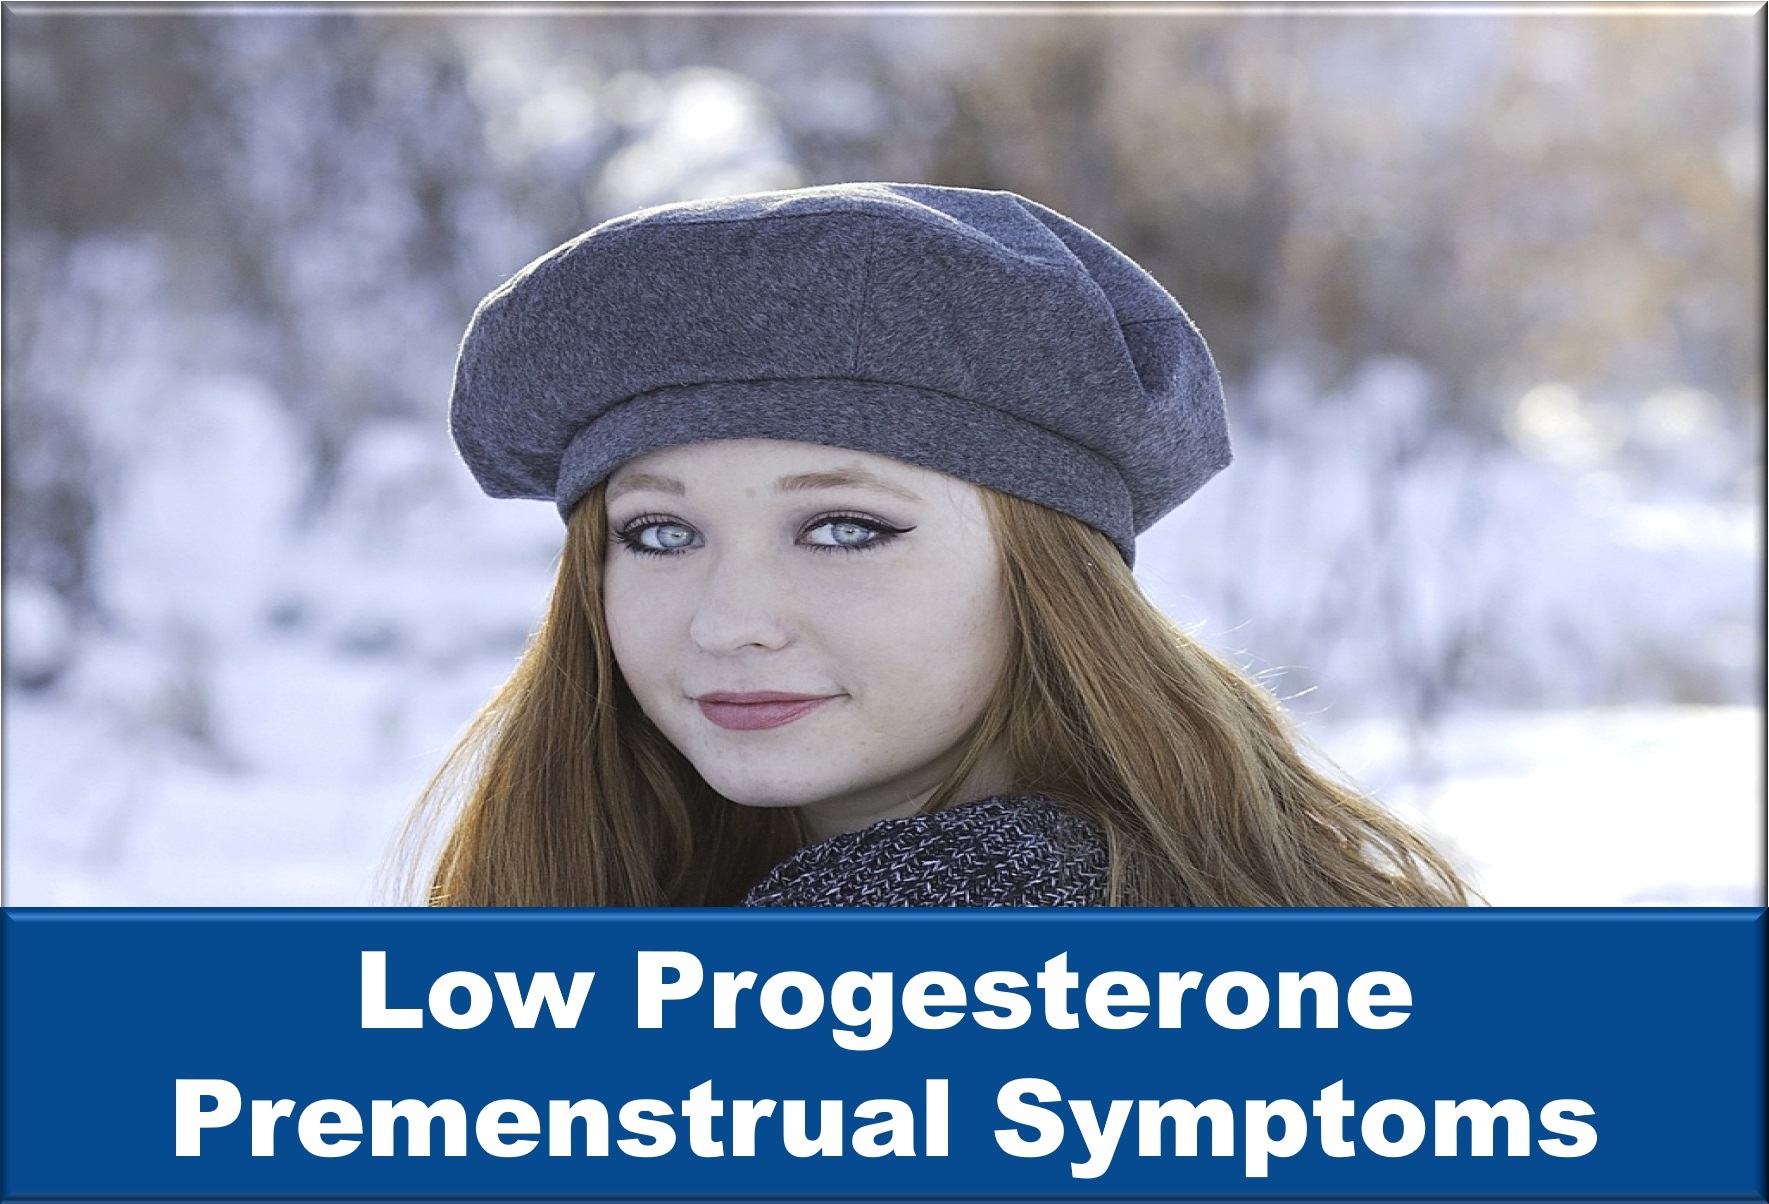 Low Progesterone Premenstrual Systoms